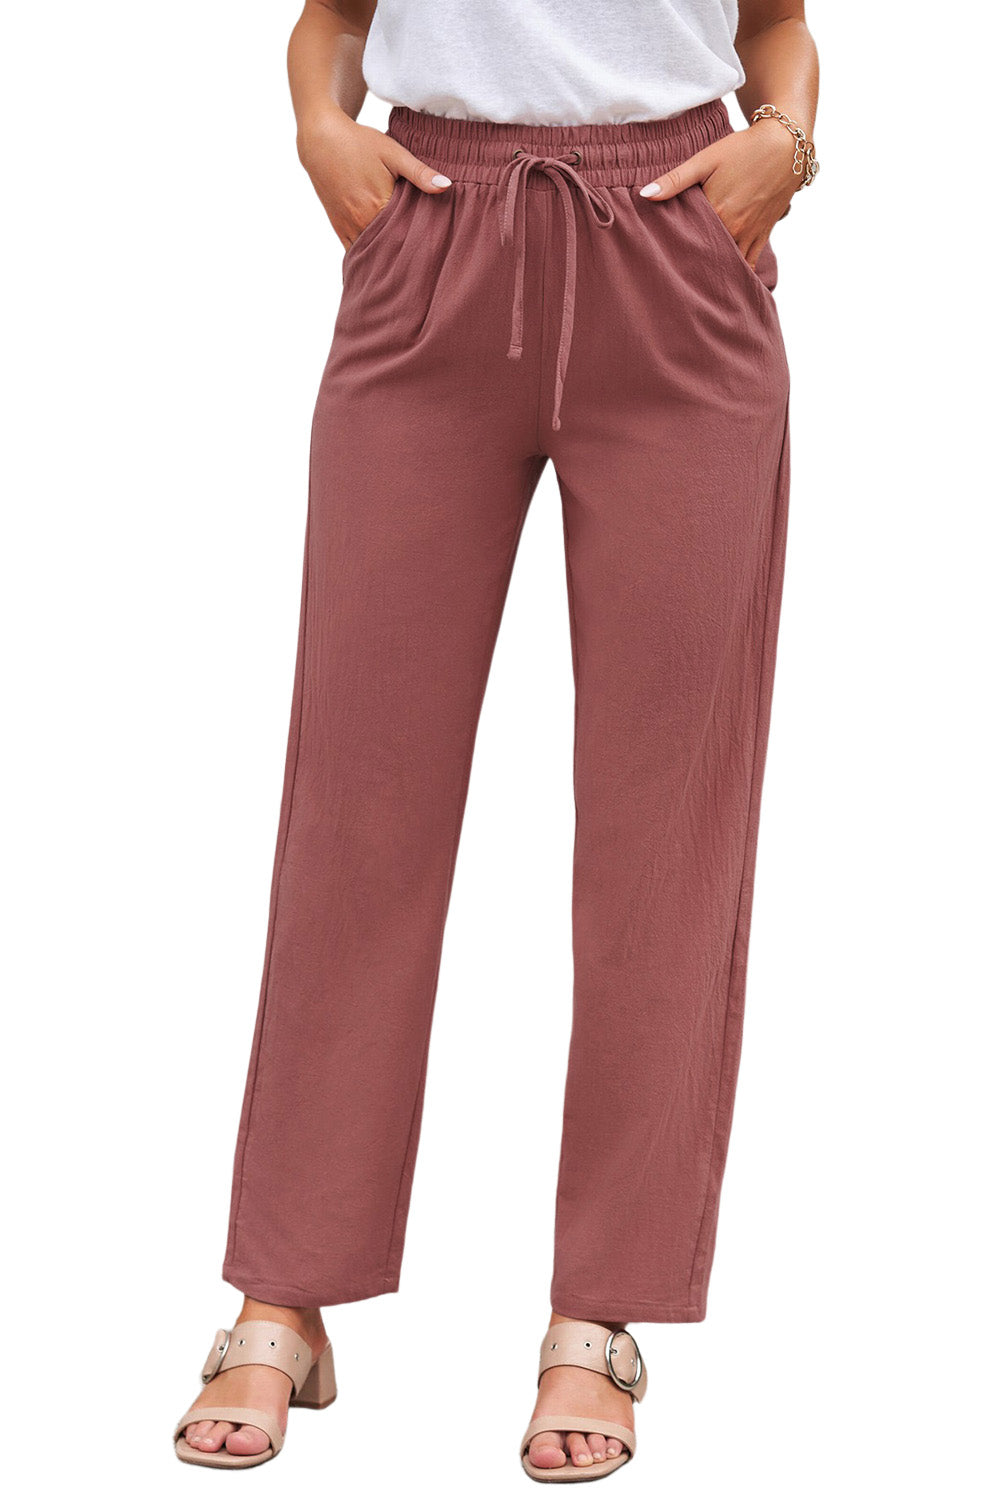 Pink Drawstring Elastic Waist Pockets Long Straight Legs Pants